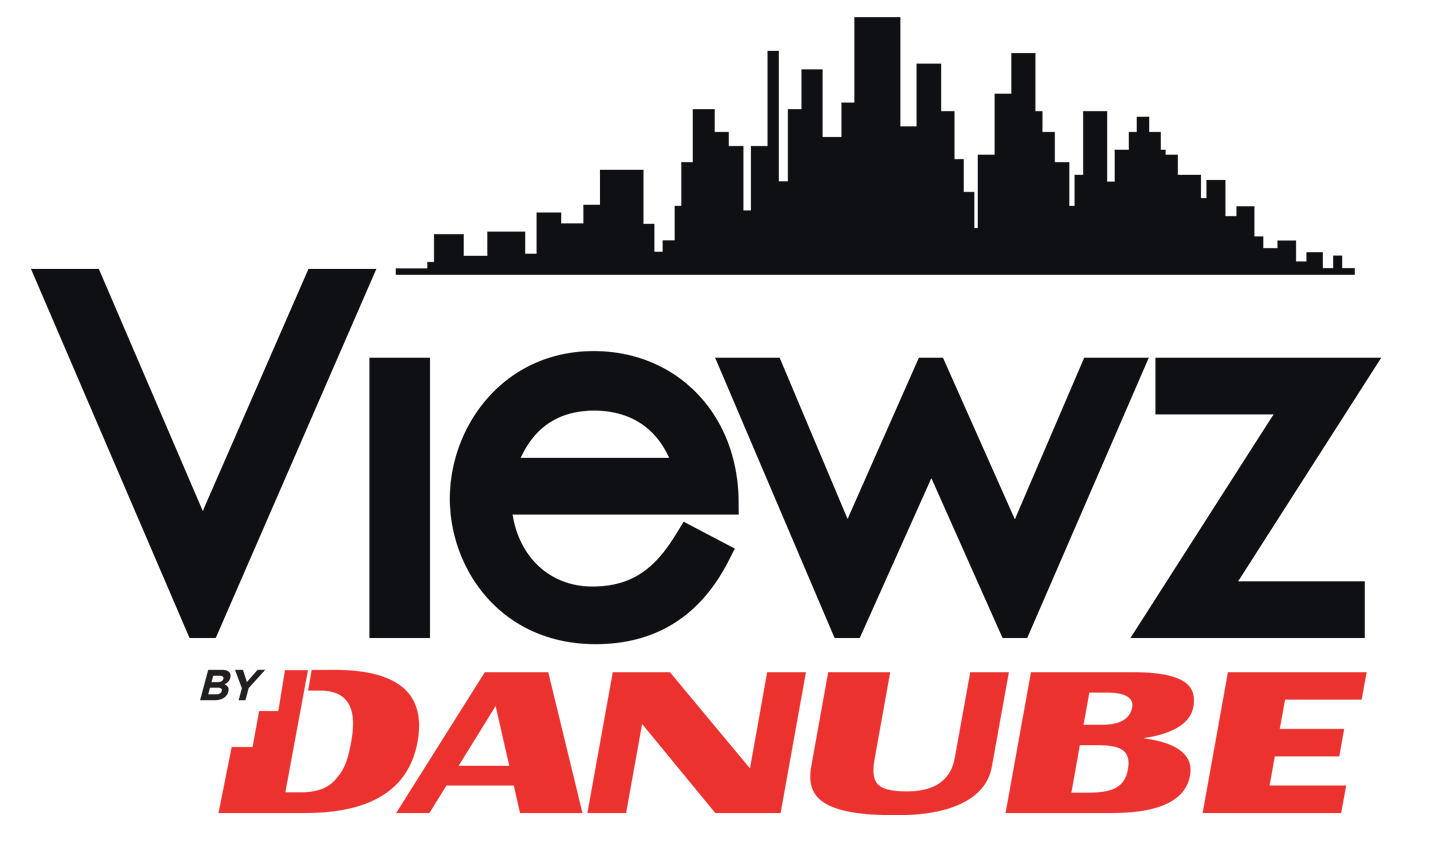 VIEWZ by Danube